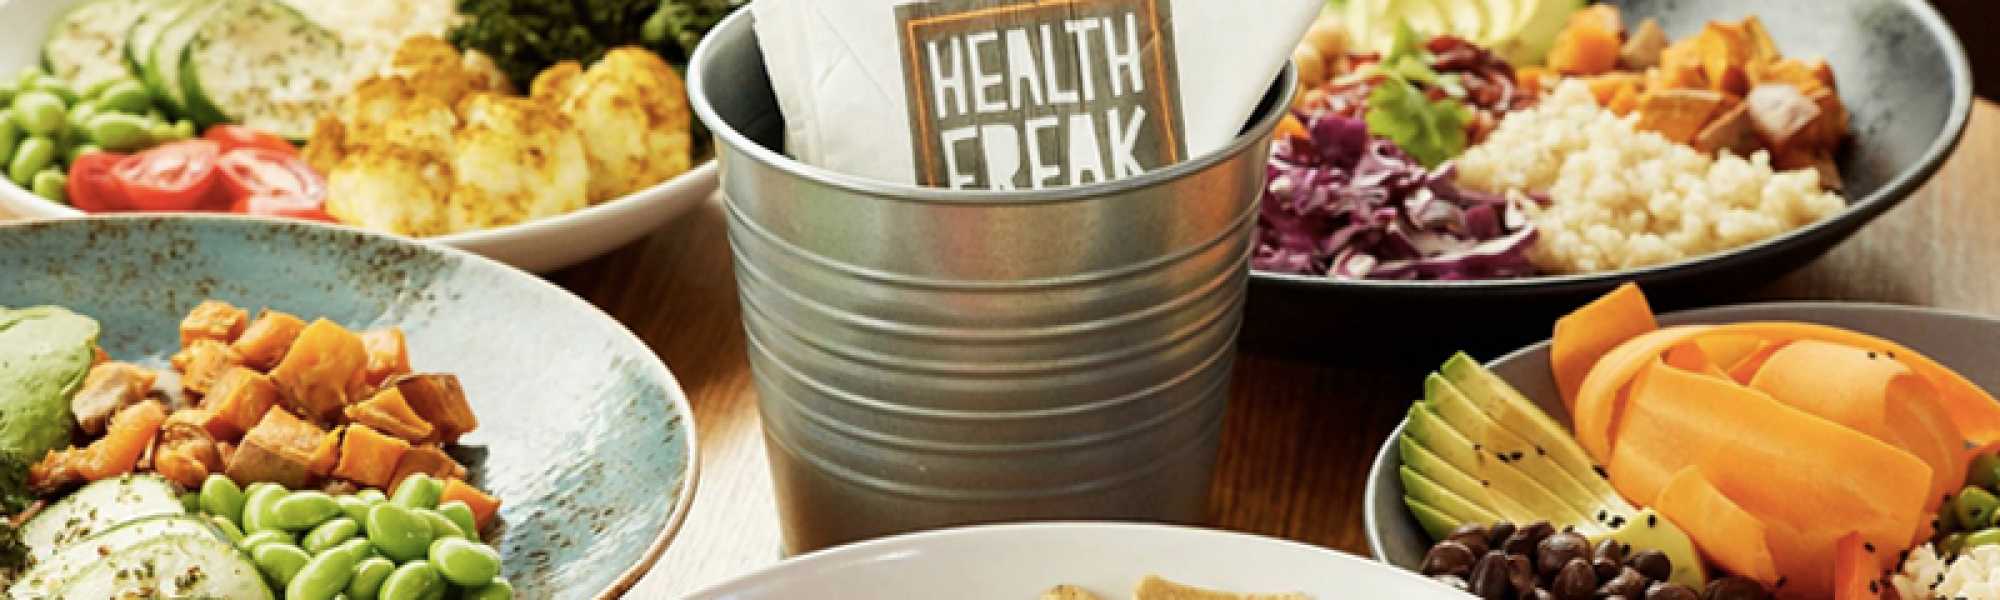 Health Freak Cafe South Perth